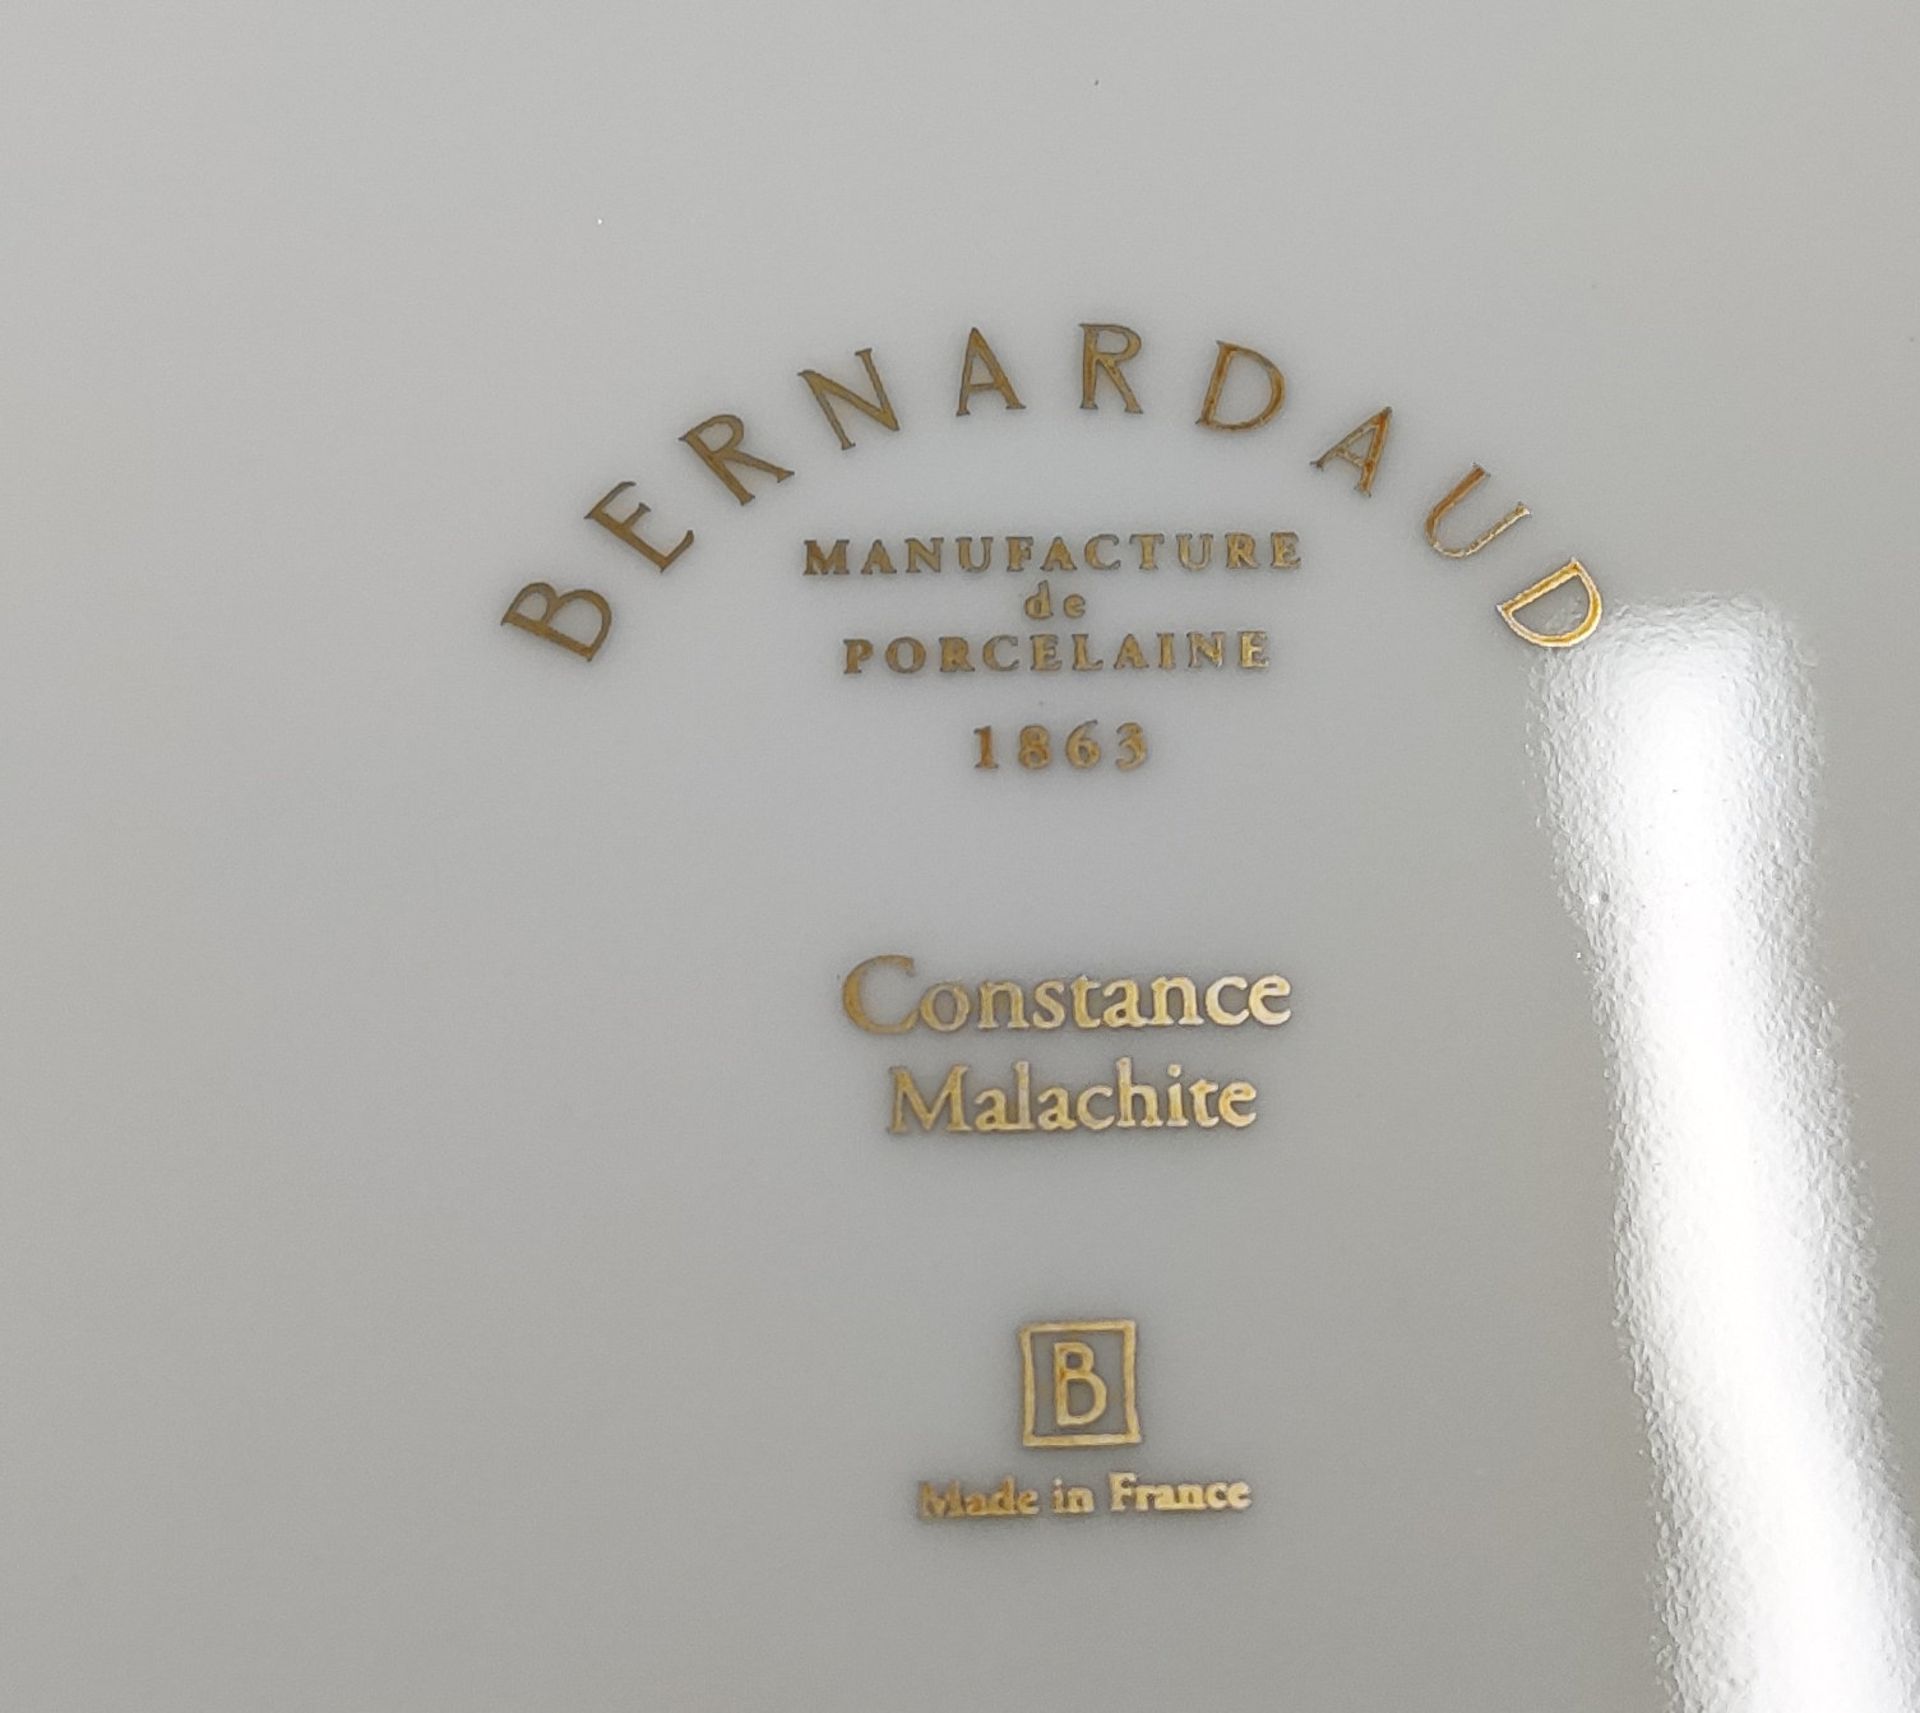 1 x BERNARDAUD Constance Malachite Service Plate X 2 - Boxed - Original RRP £358.00 - Image 13 of 20